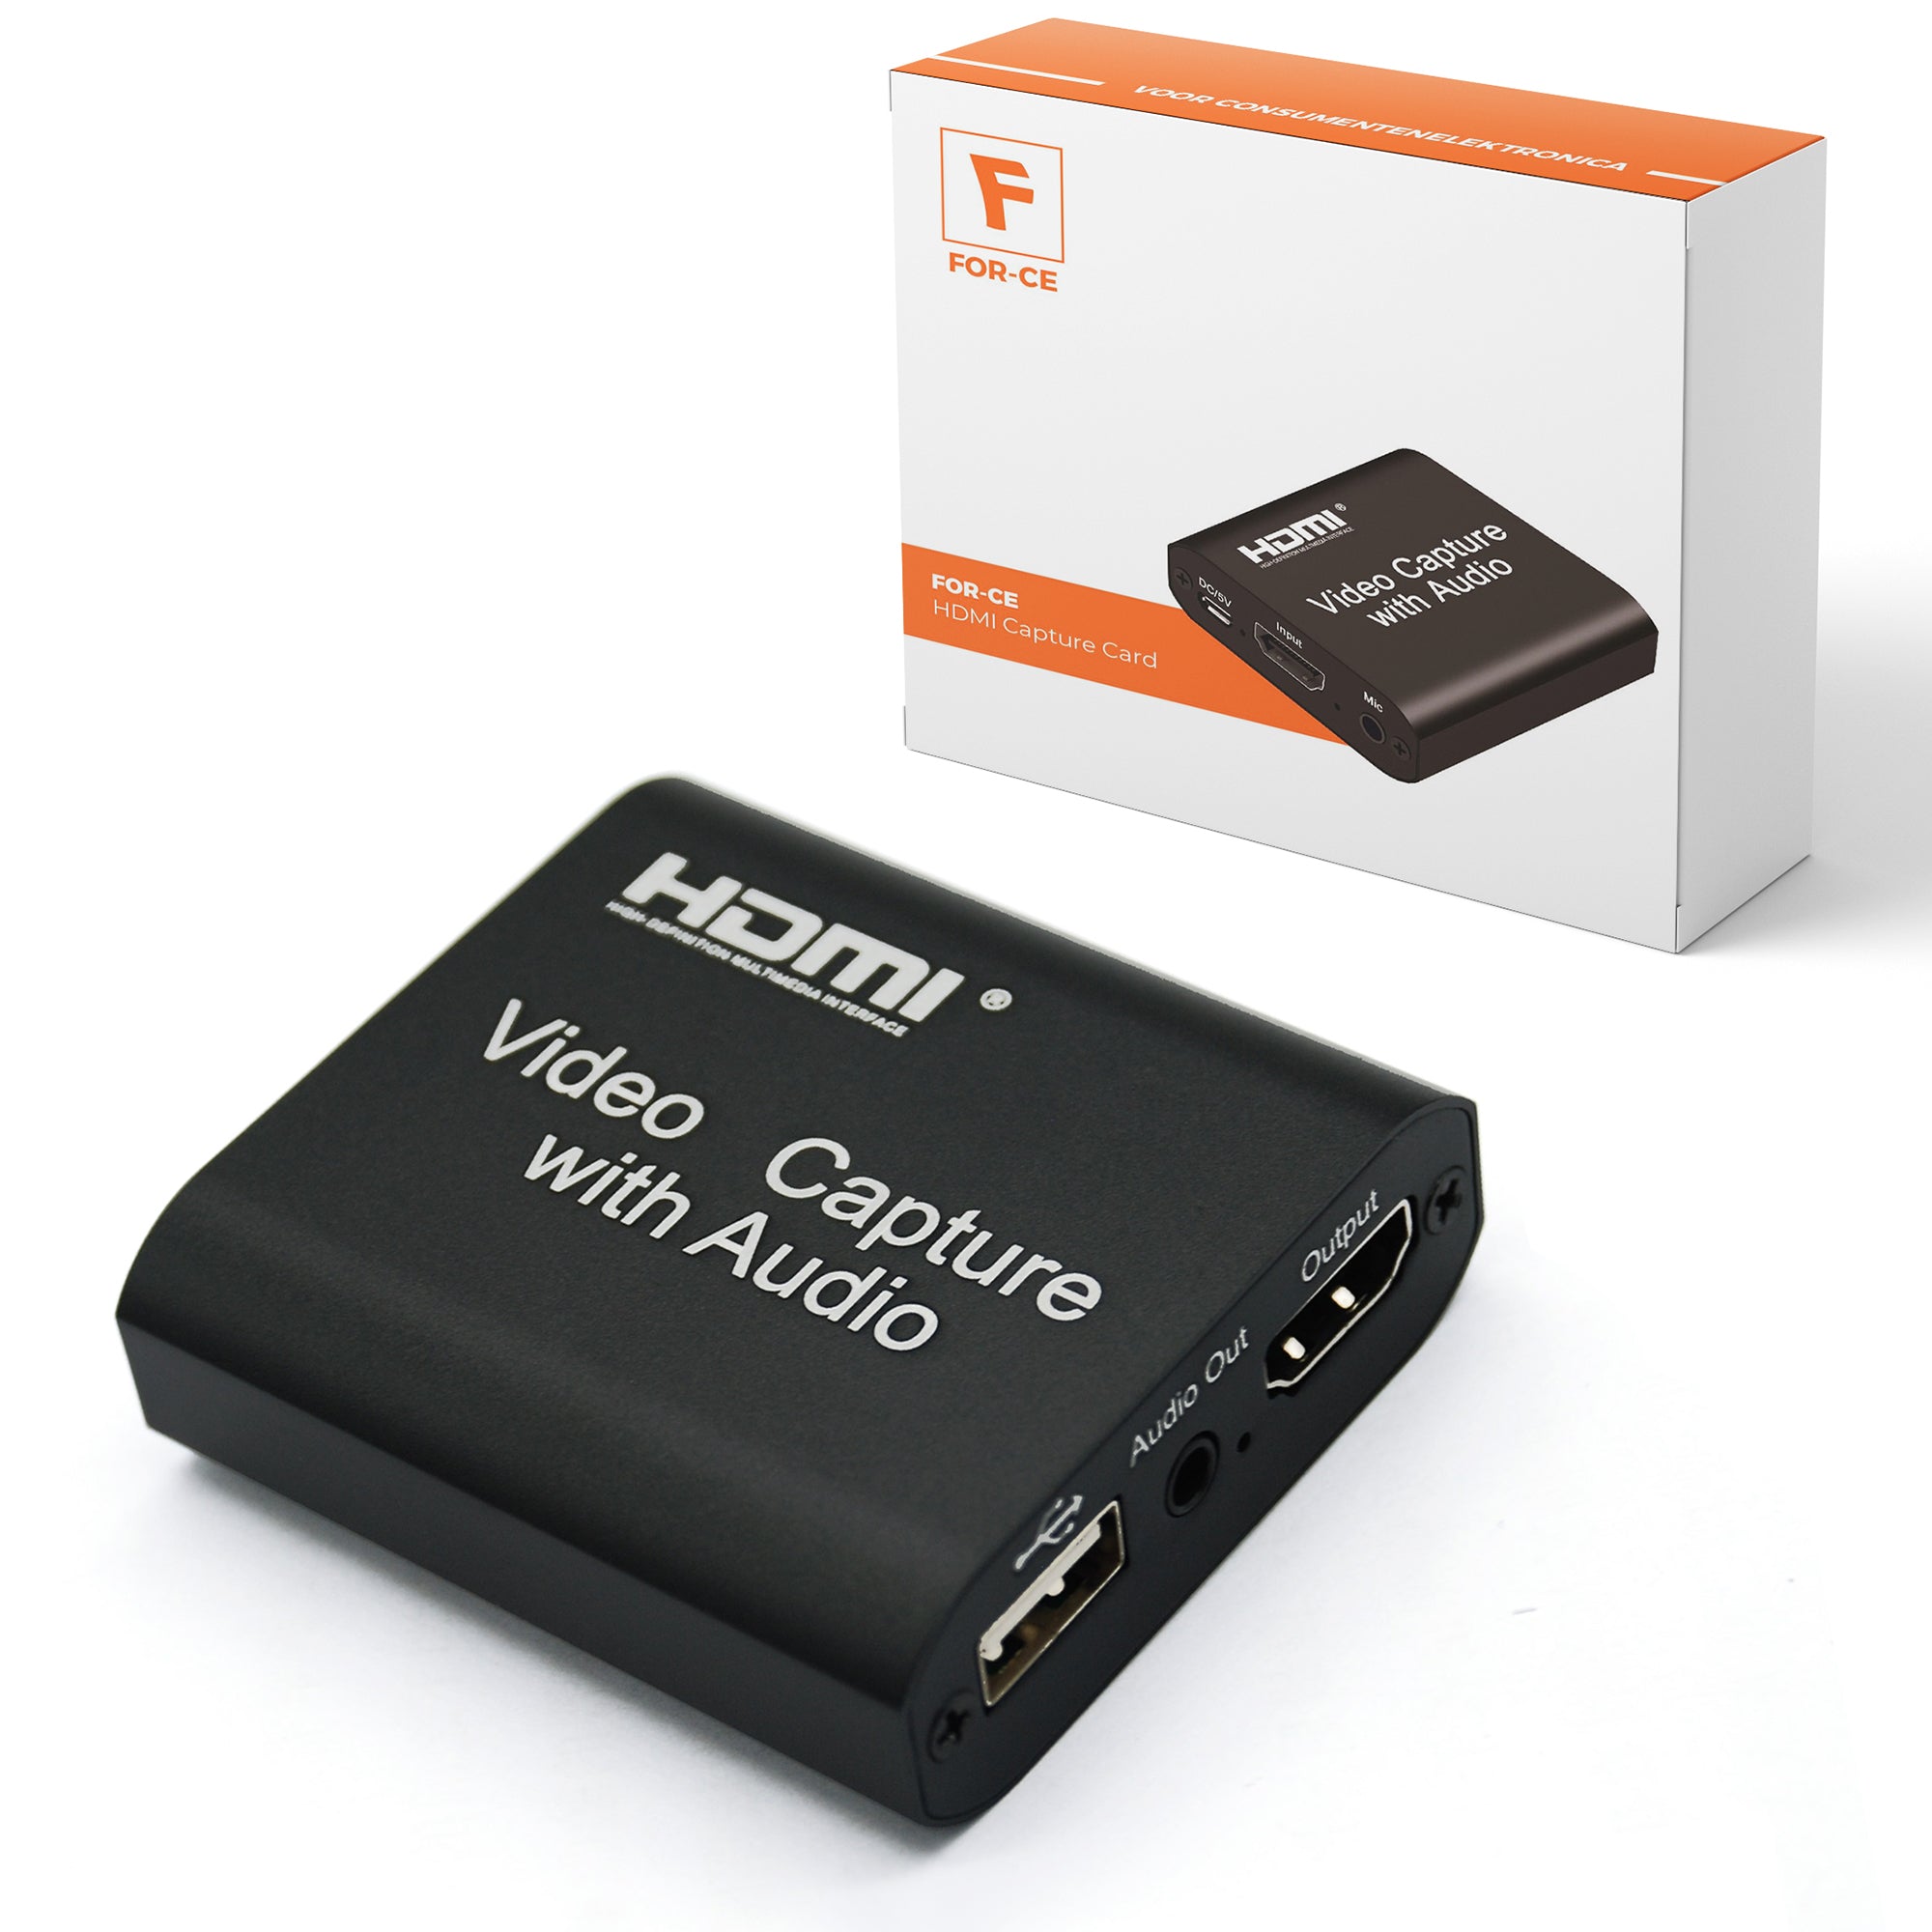 HDMI Capture Card